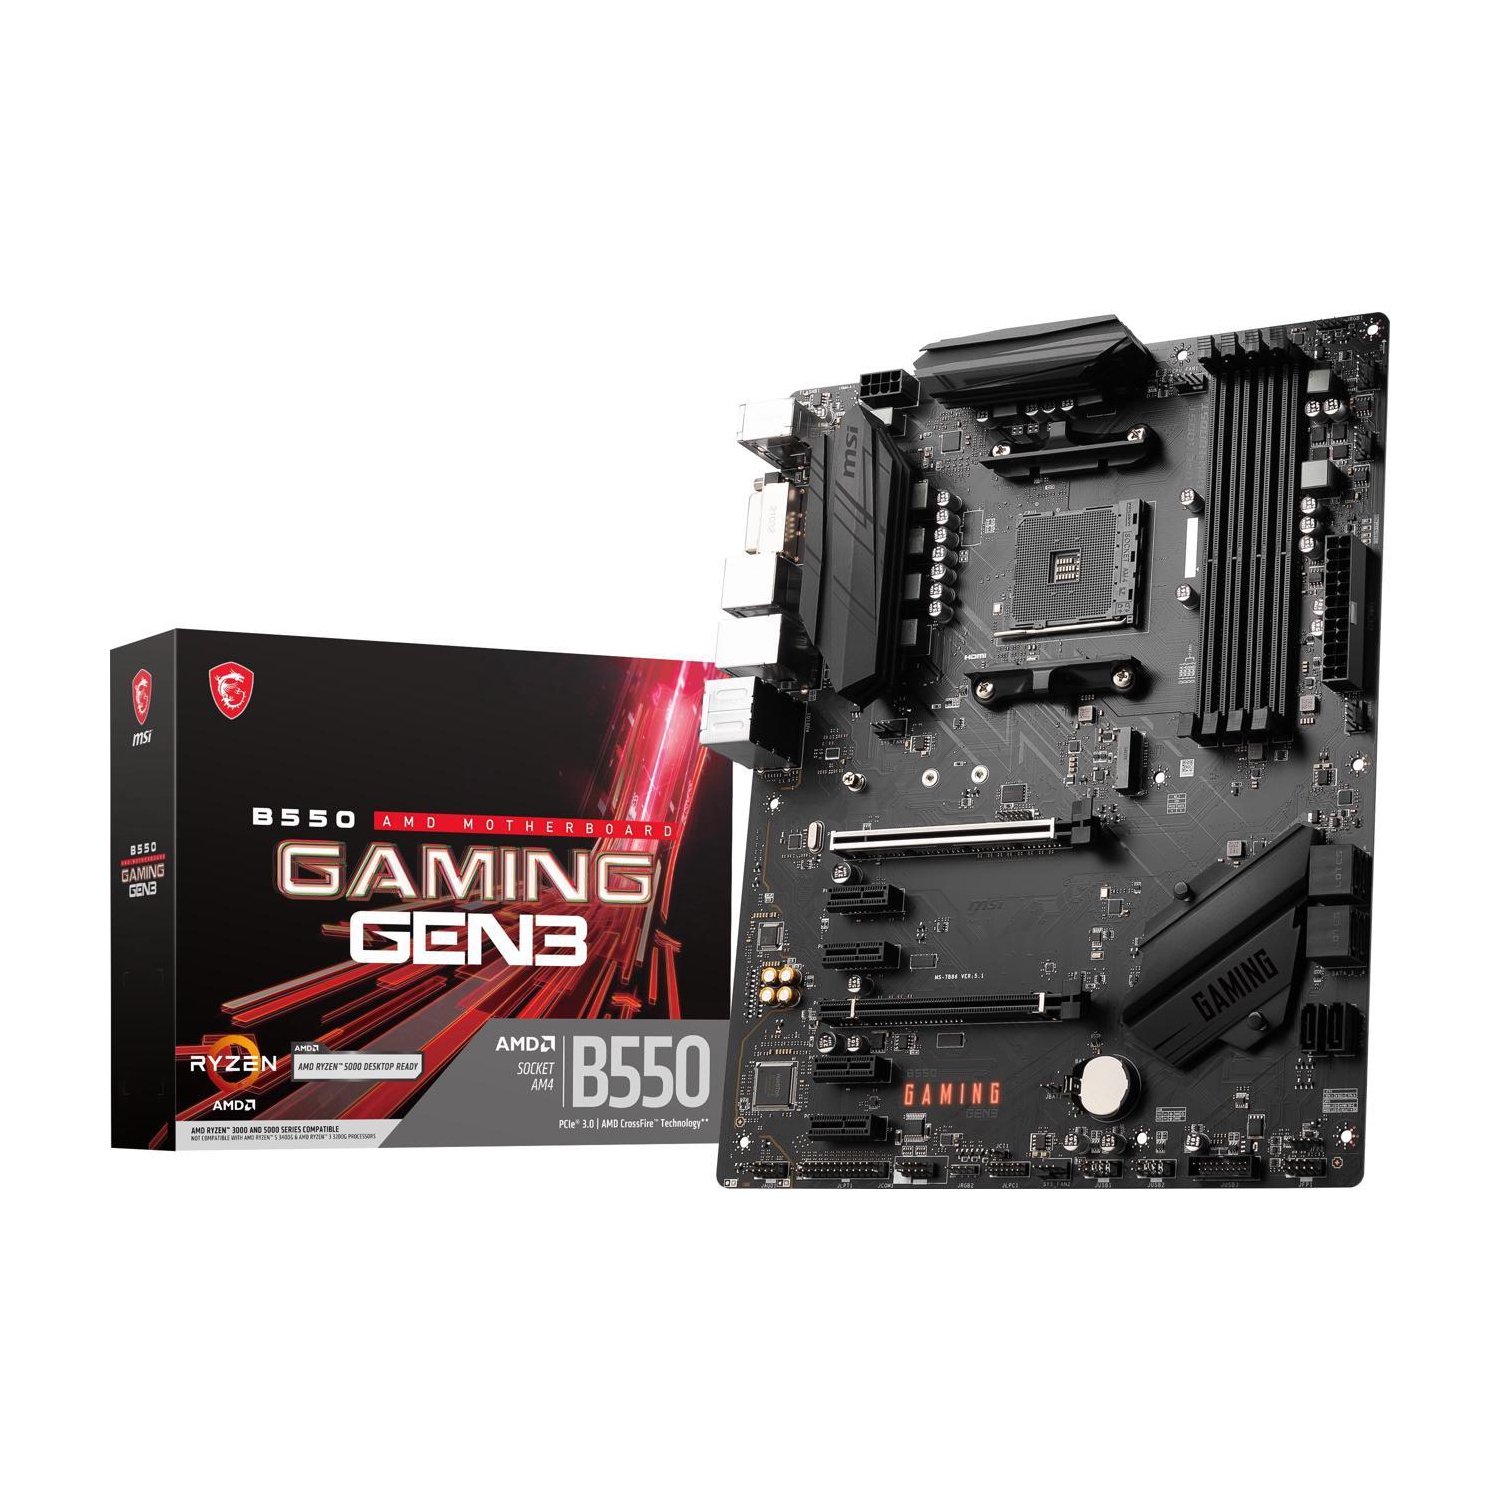 MSI B550 Gaming GEN3 Gaming Motherboard (AMD AM4, DDR4, PCIe 3.0, SATA 6Gb/s, M.2, USB 3.2 Gen 1, HDMI, ATX, AMD Ryzen 5000/4000 Series Processors)